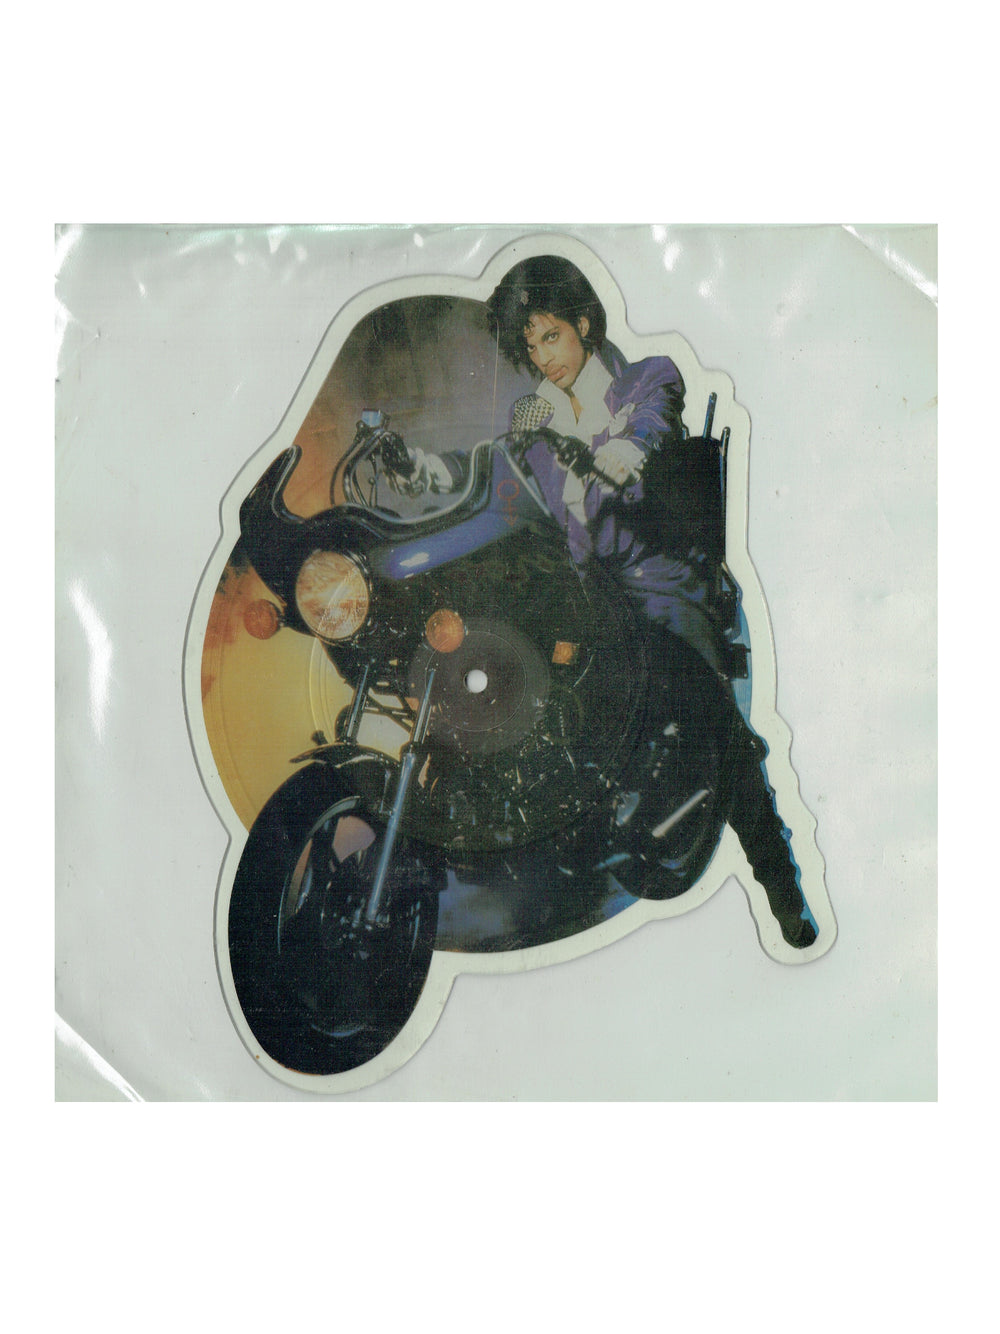 Prince – & The Revolution Purple Rain God Shaped Picture Disc 7 Inch Vinyl 1984 UK Release